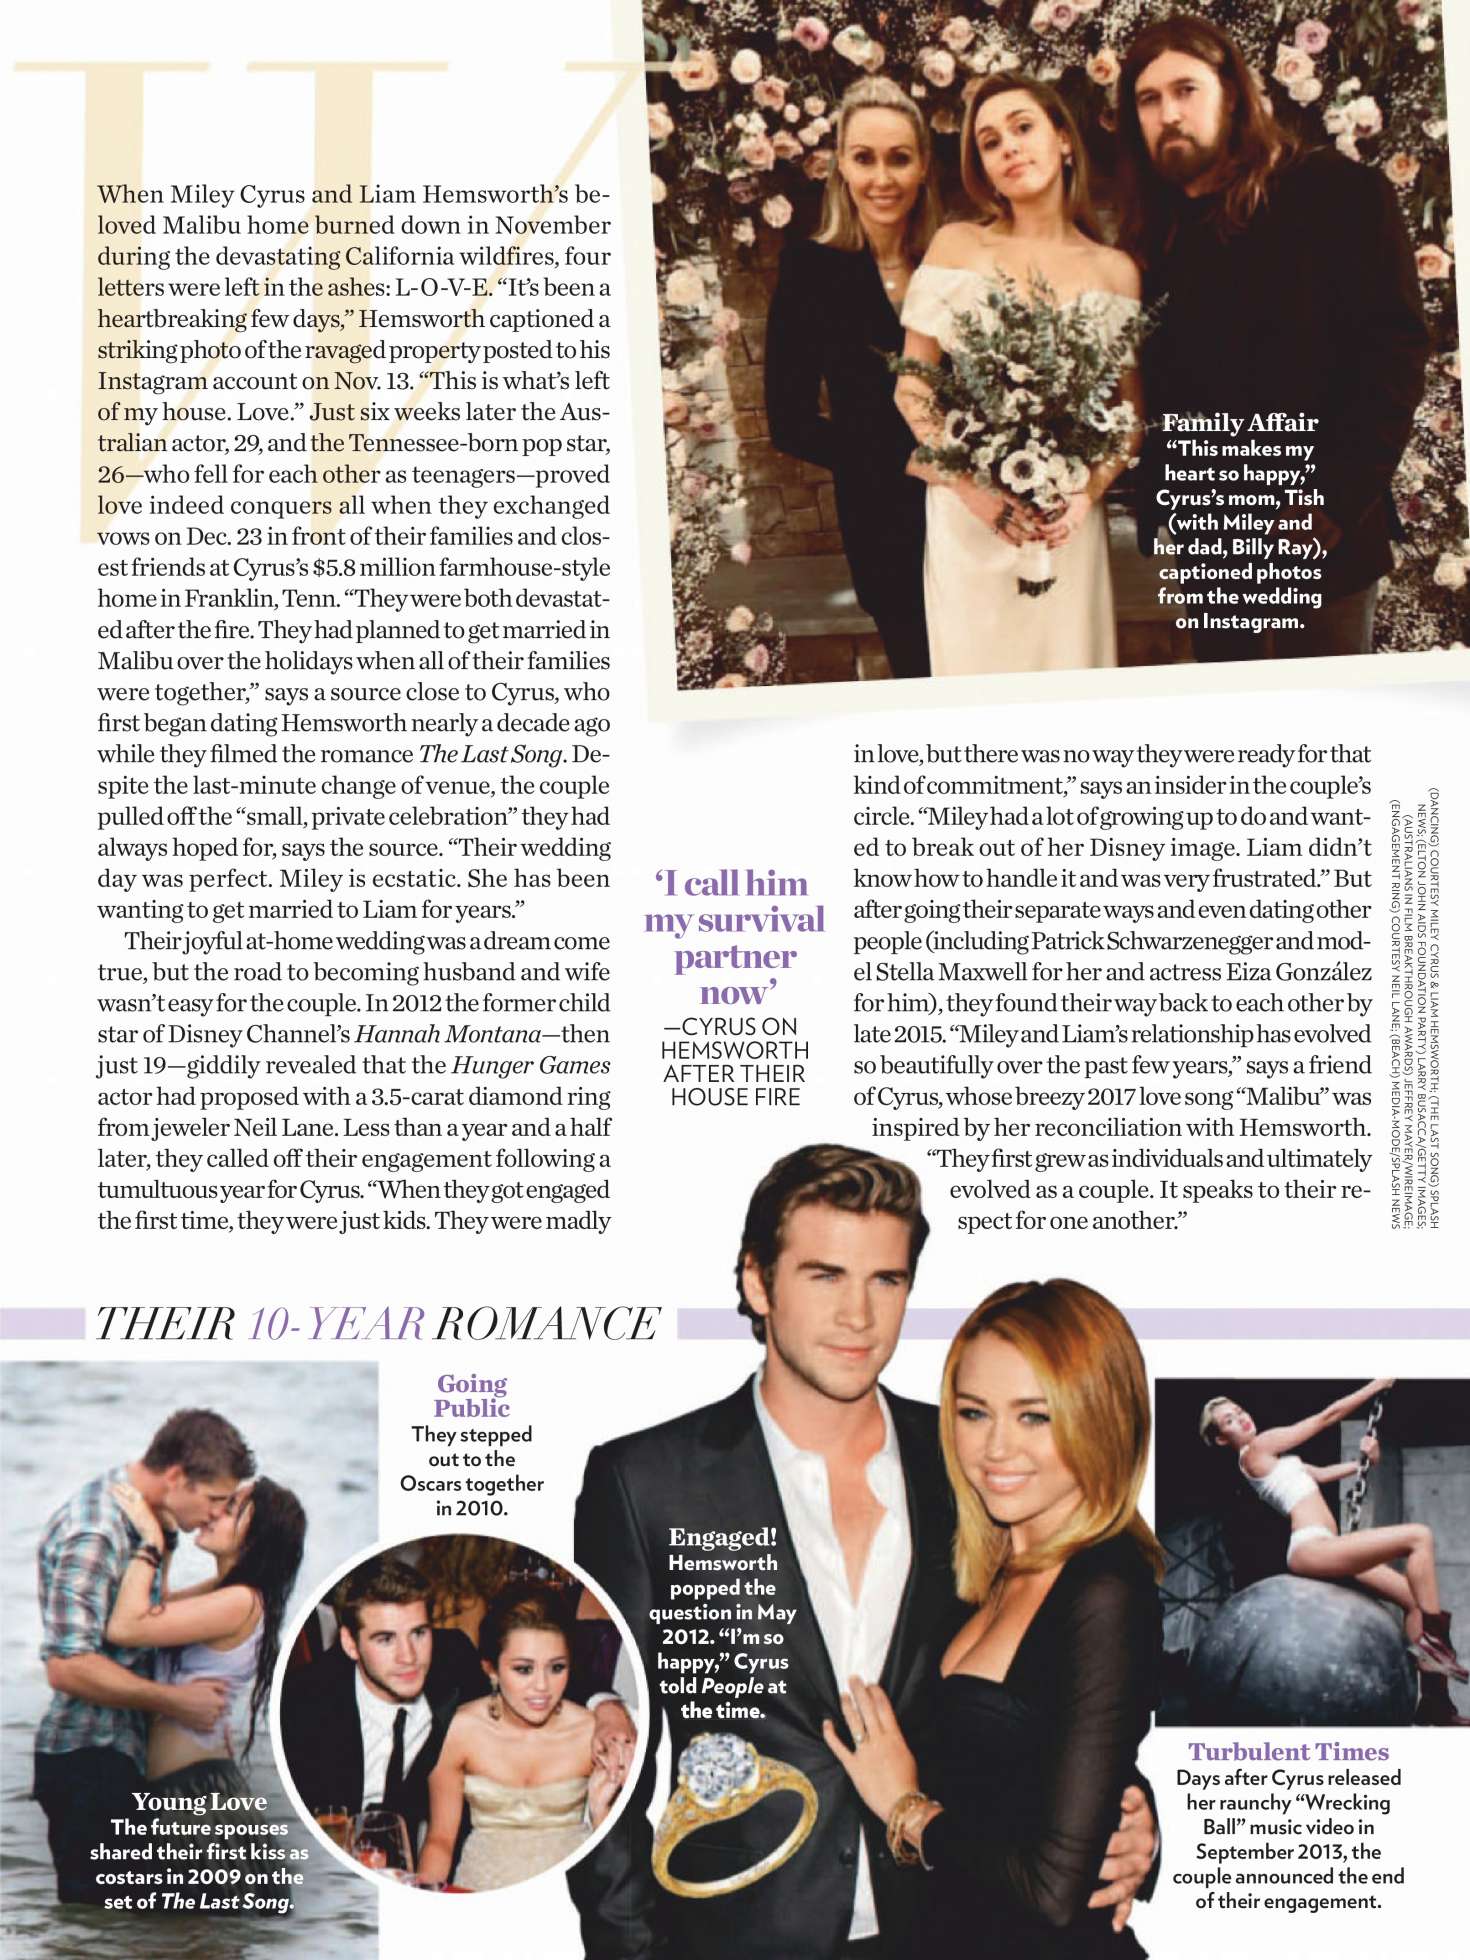 Miley Cyrus and Liam Hemsworth â€“ People US Magazine (January 2019)